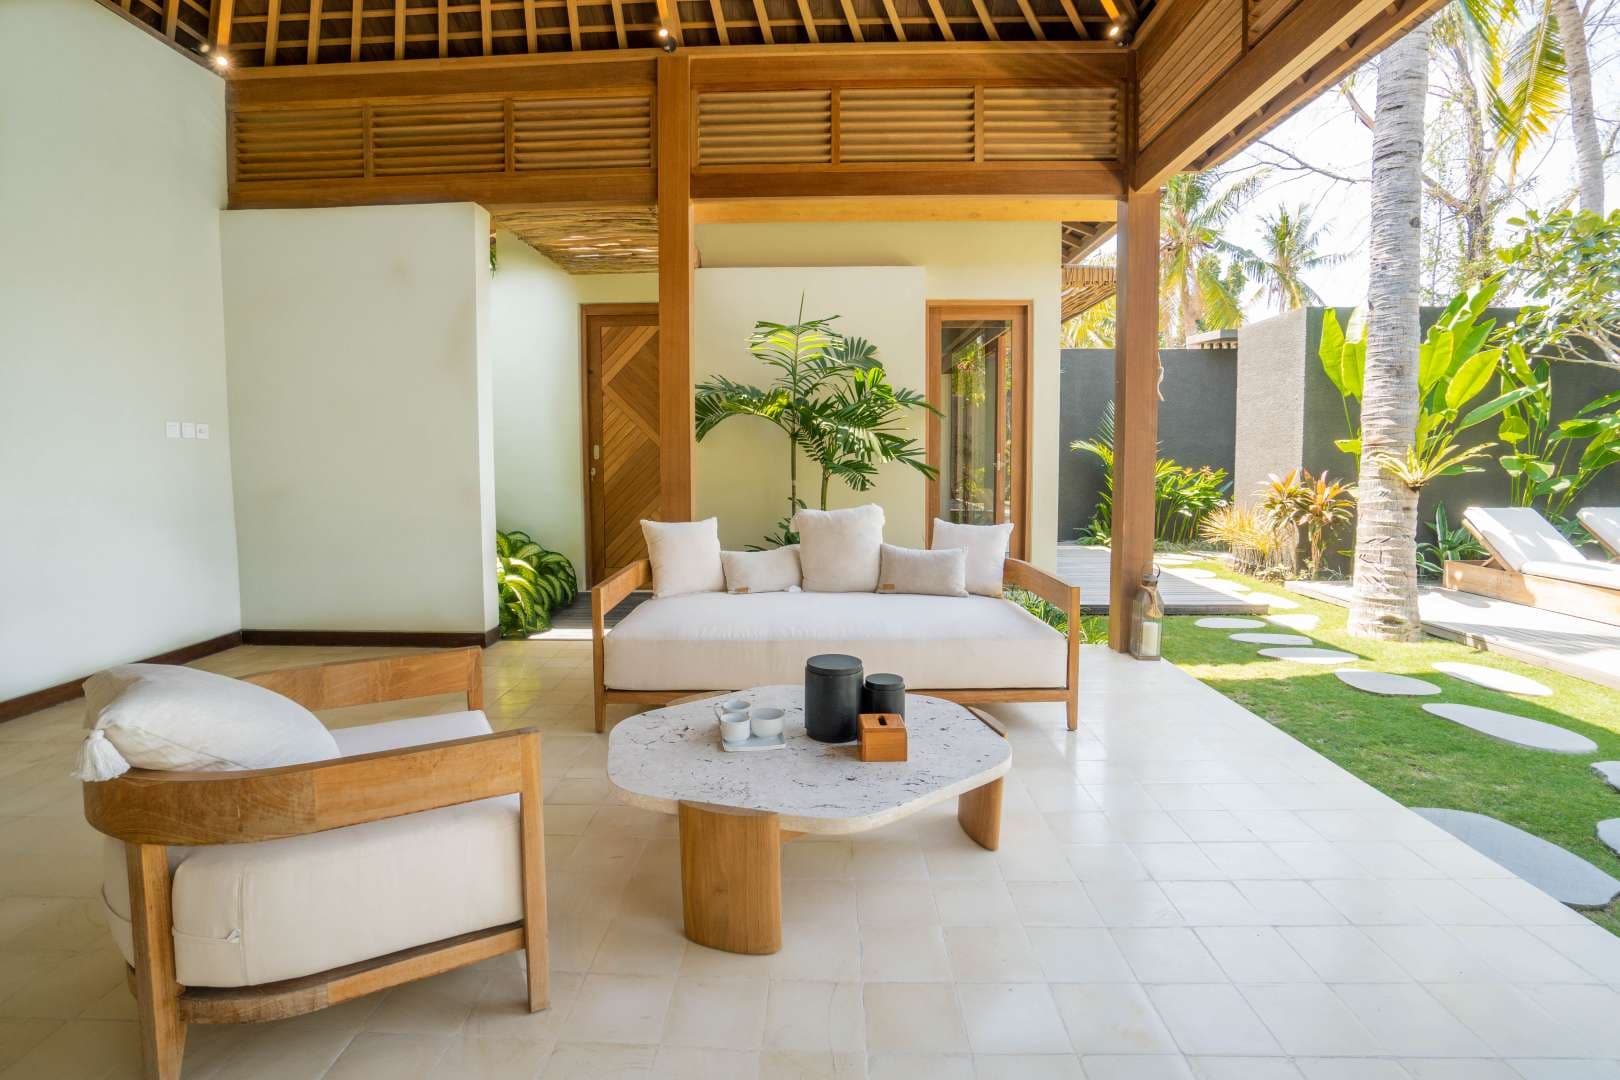 2 Bedroom Villa For Sale Bali Lp08543 1dae64ded16a7300.jpg